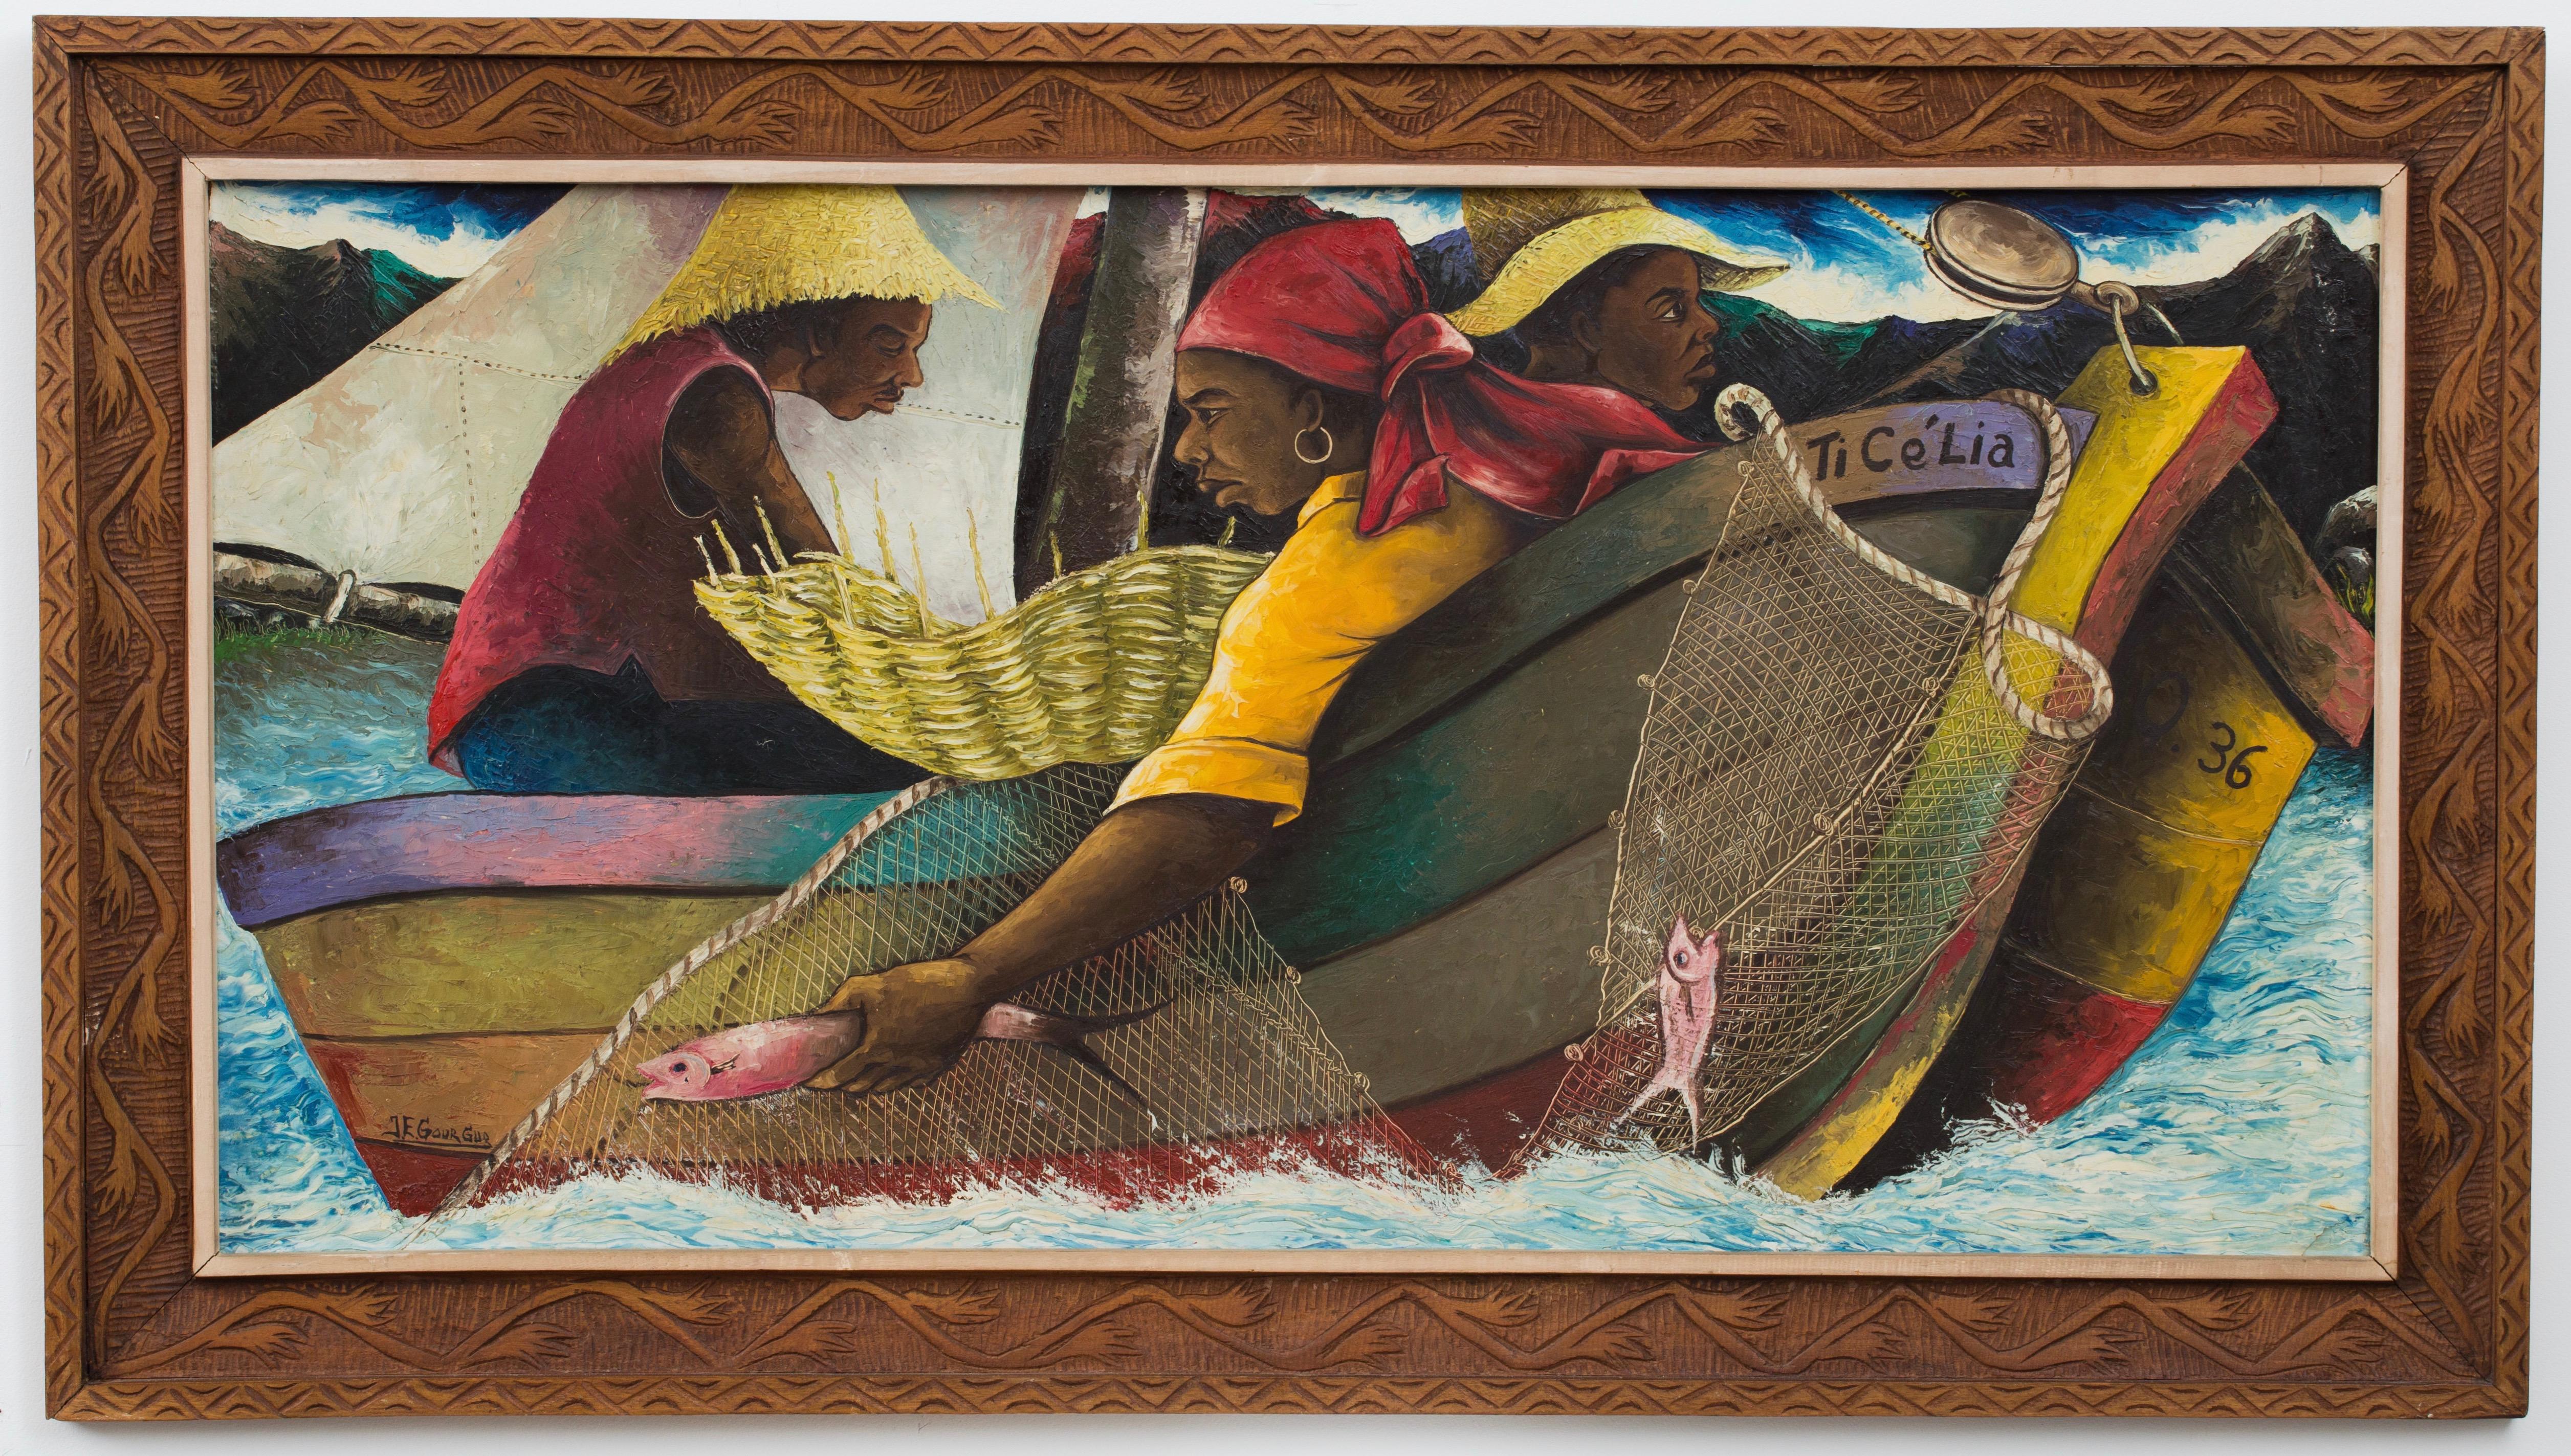 Ti Cé Lia, Haitian Art, Haiti - Painting by Jacques Enguerrand Gourgue